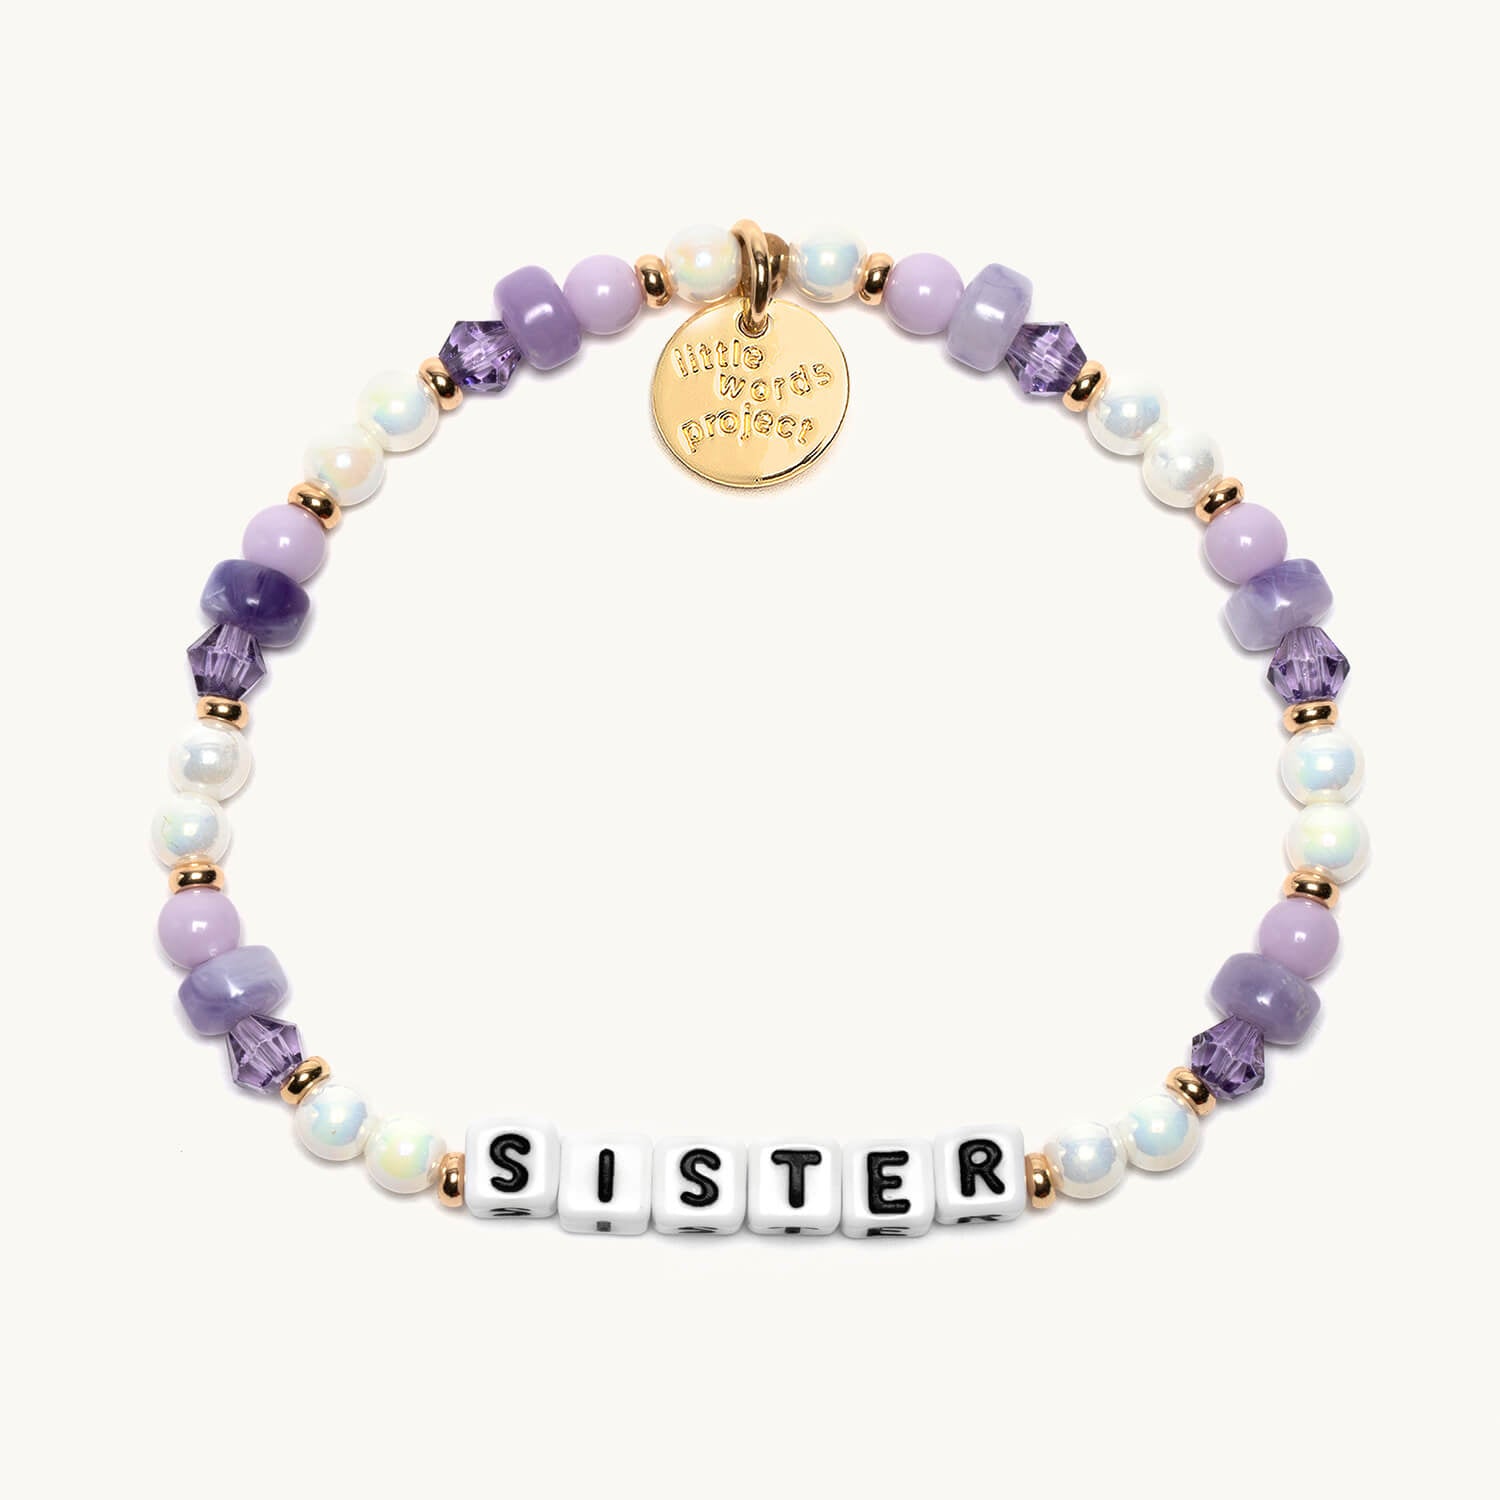 Sister- Little Words Project Family Bracelet